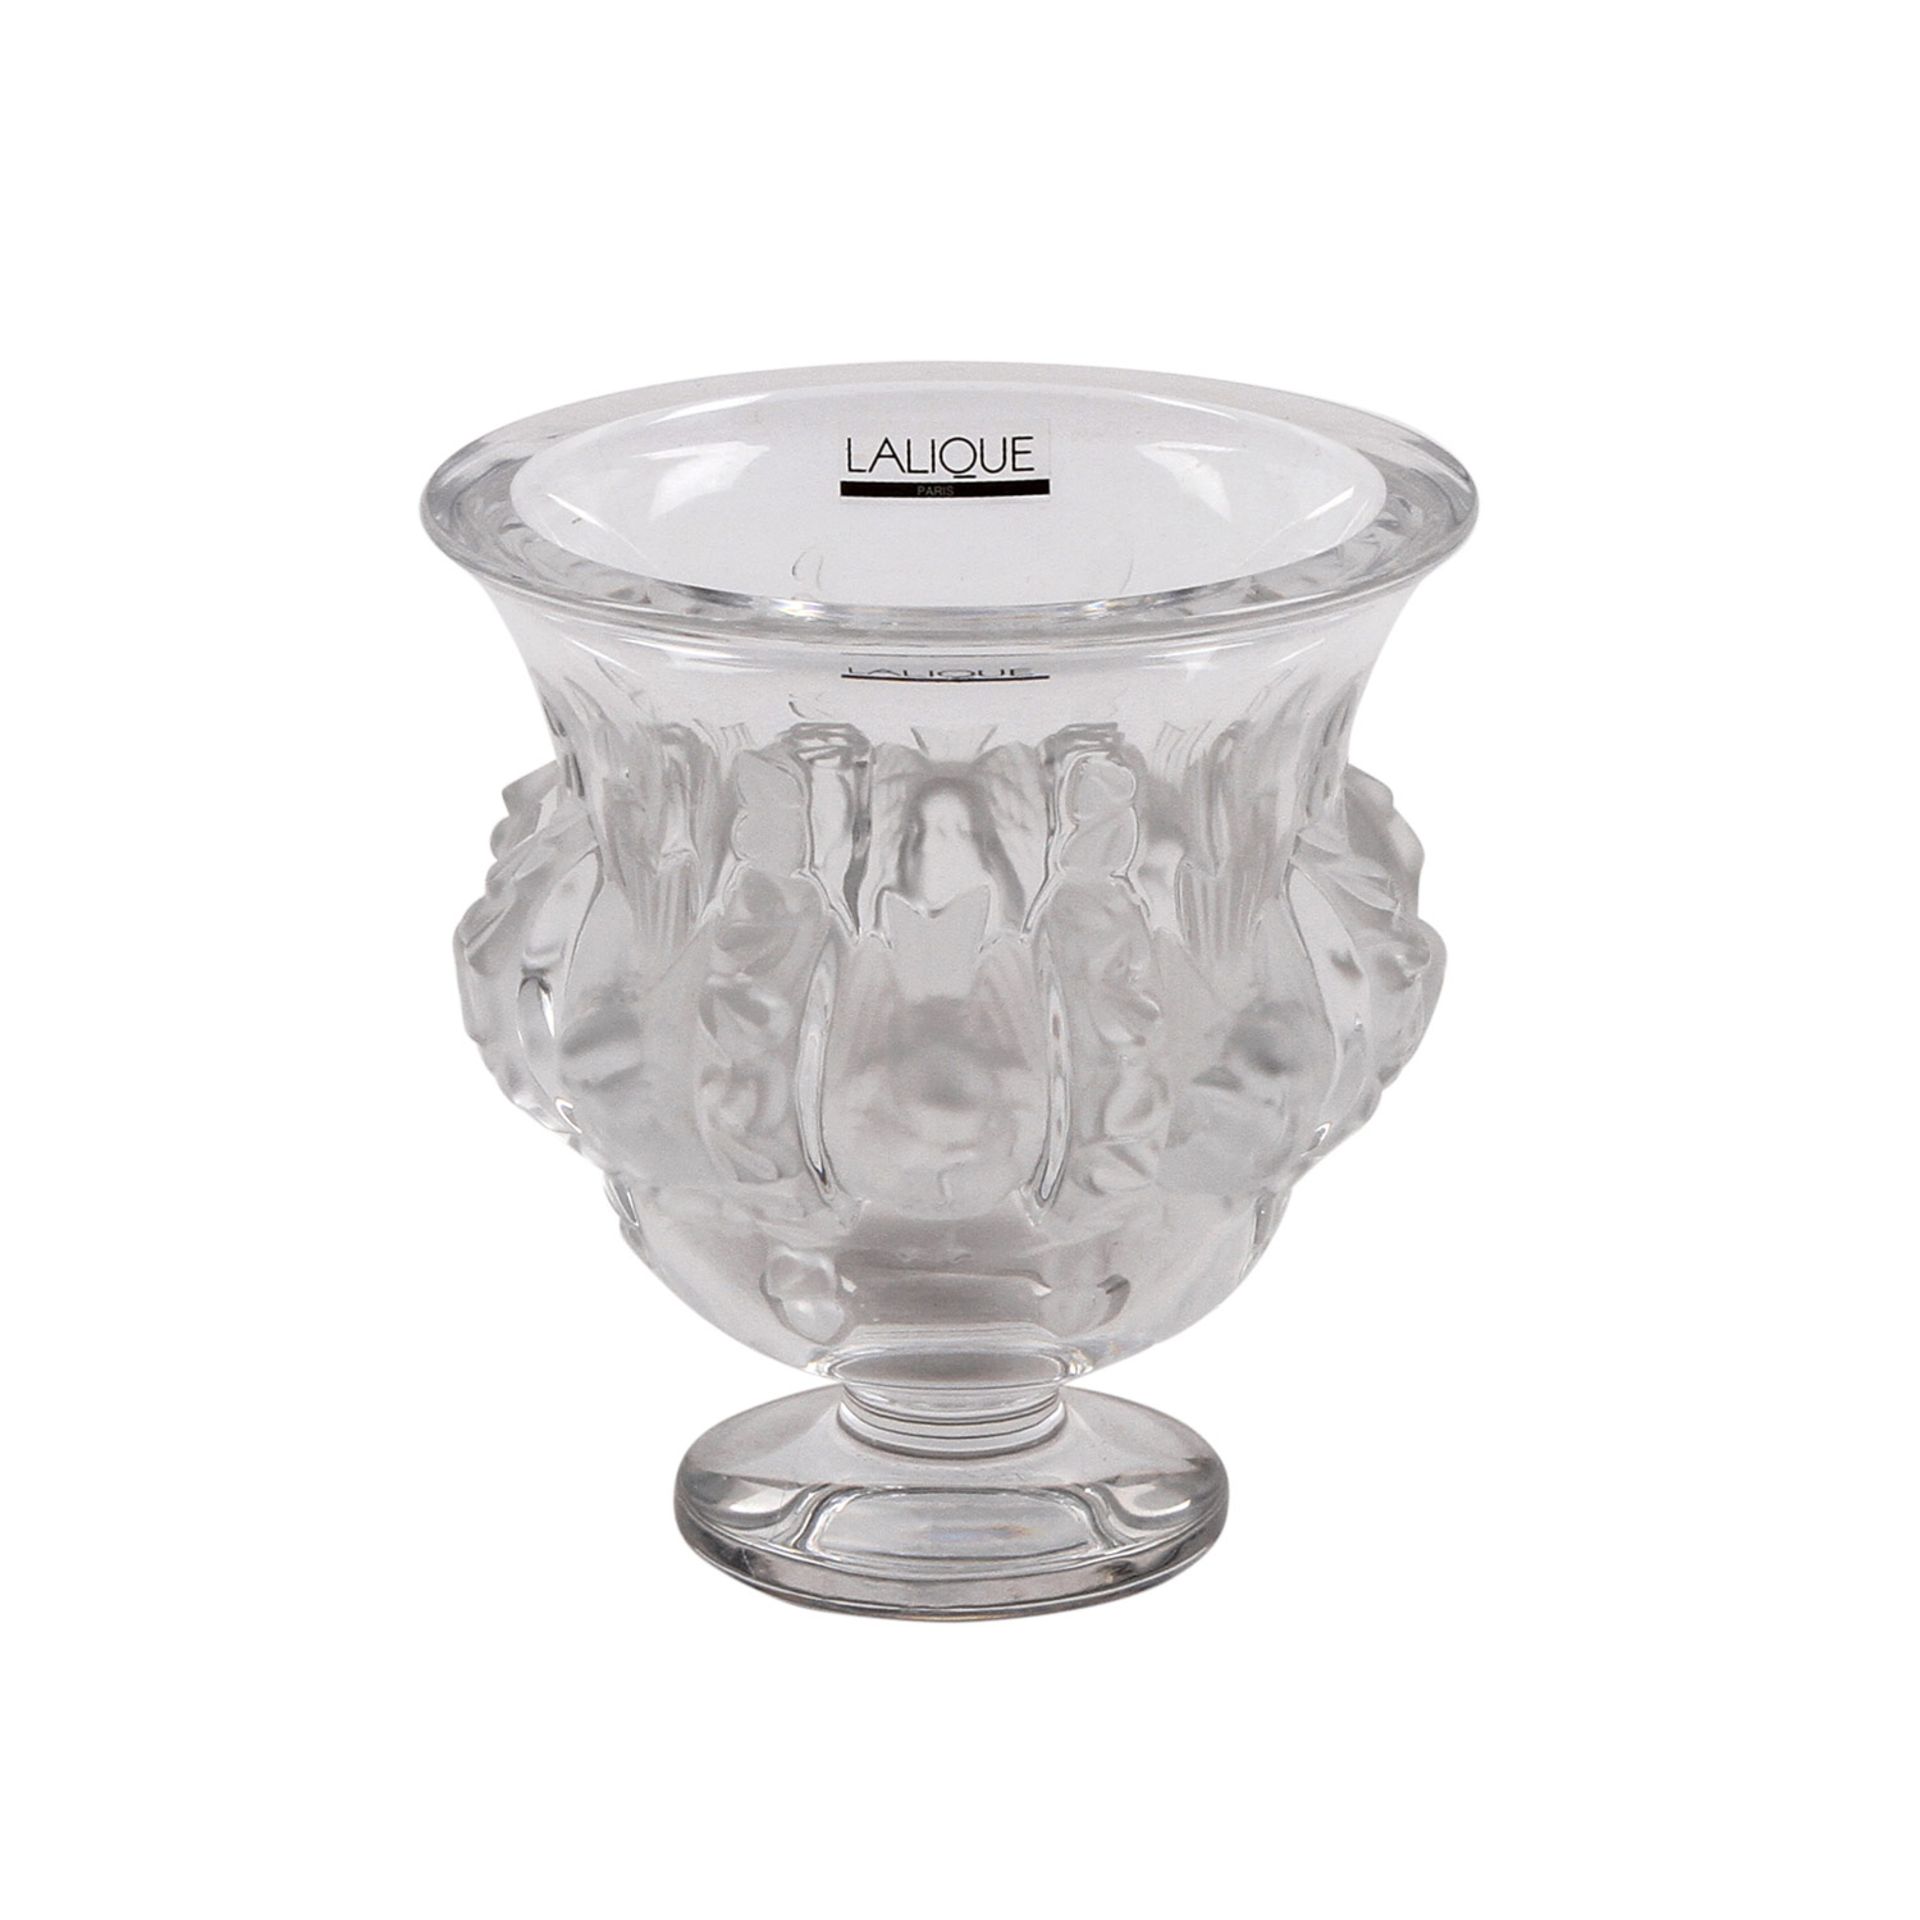 LALIQUE Vase DAMPIERRE, Entwurf von René Lalique aus dem 20.Jh. aus klarem, mattiertem Bleikristall,